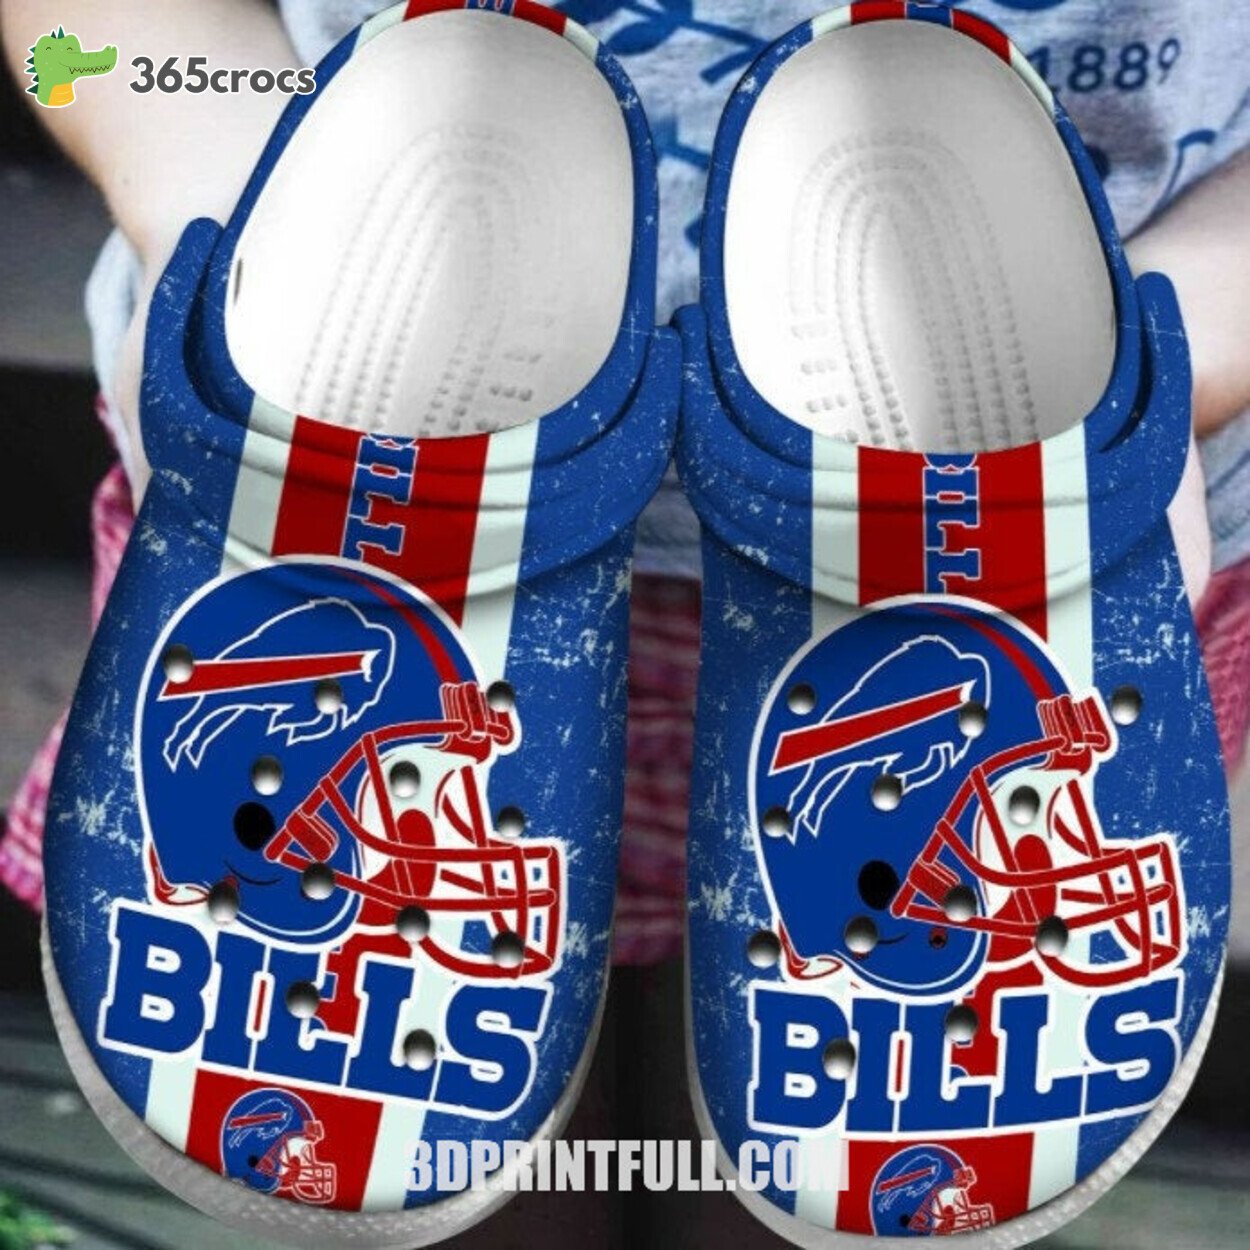 Buffalo-Bills-NFL-Themed-Comfortable-Clog-Shoes-Distinct-Fan-Design